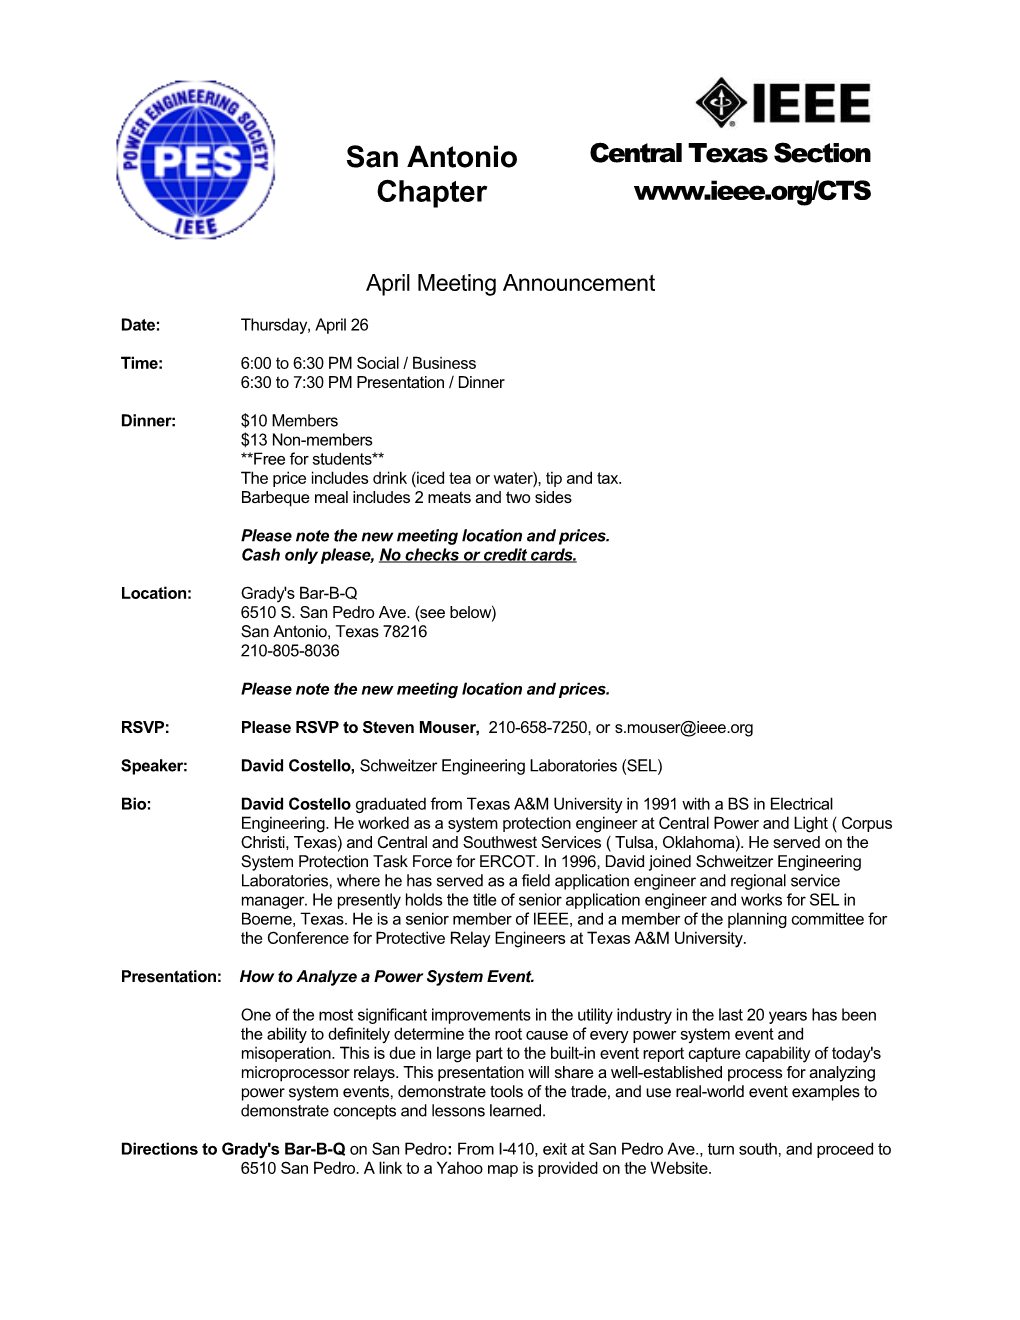 IEEE-PES San Antonio Chapter Meeting Announcement